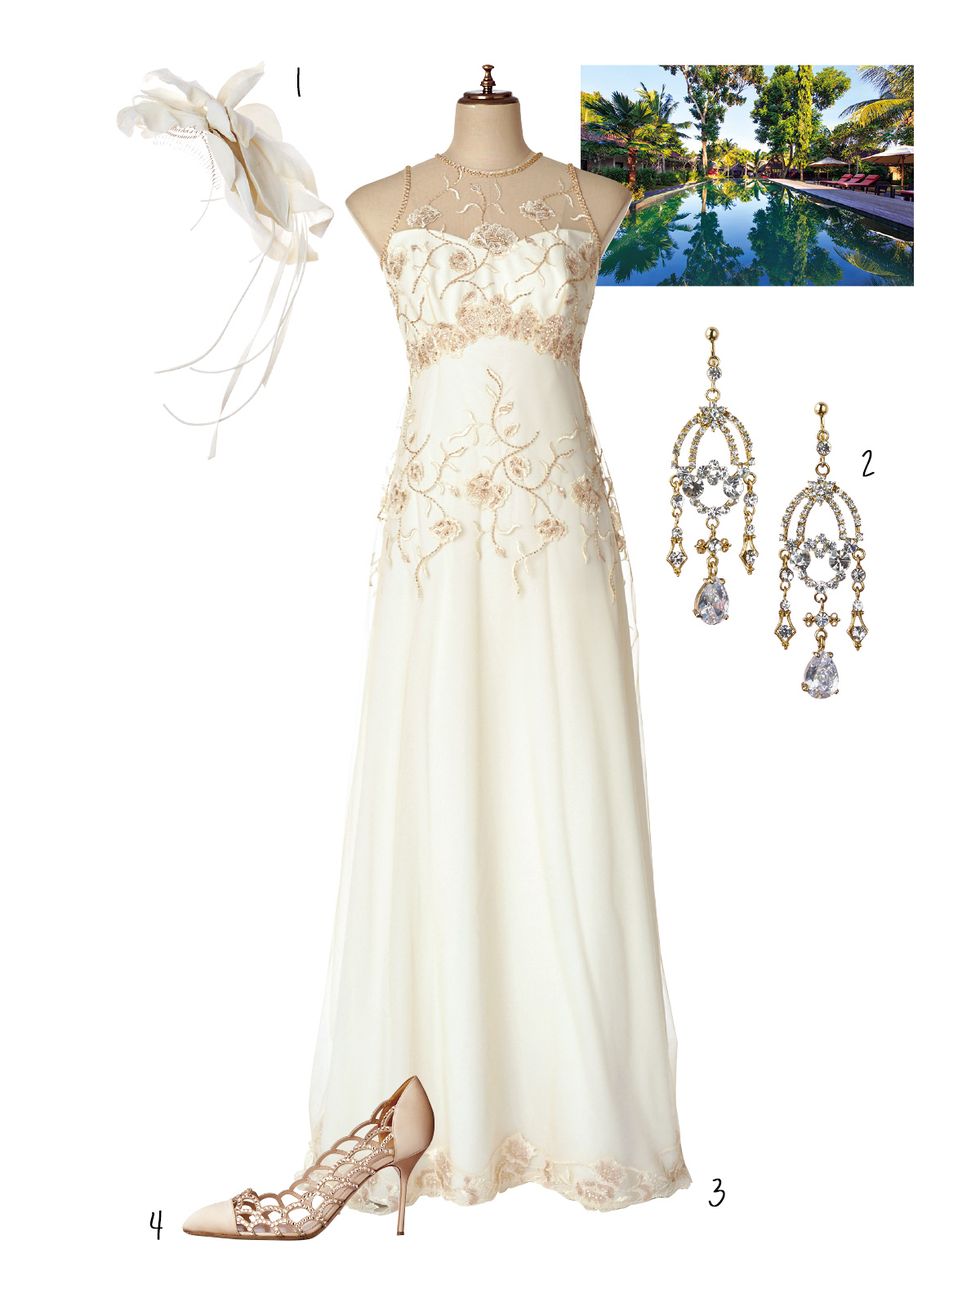 Brown, Dress, White, Formal wear, One-piece garment, Gown, Wedding dress, Pattern, Fashion, High heels, 